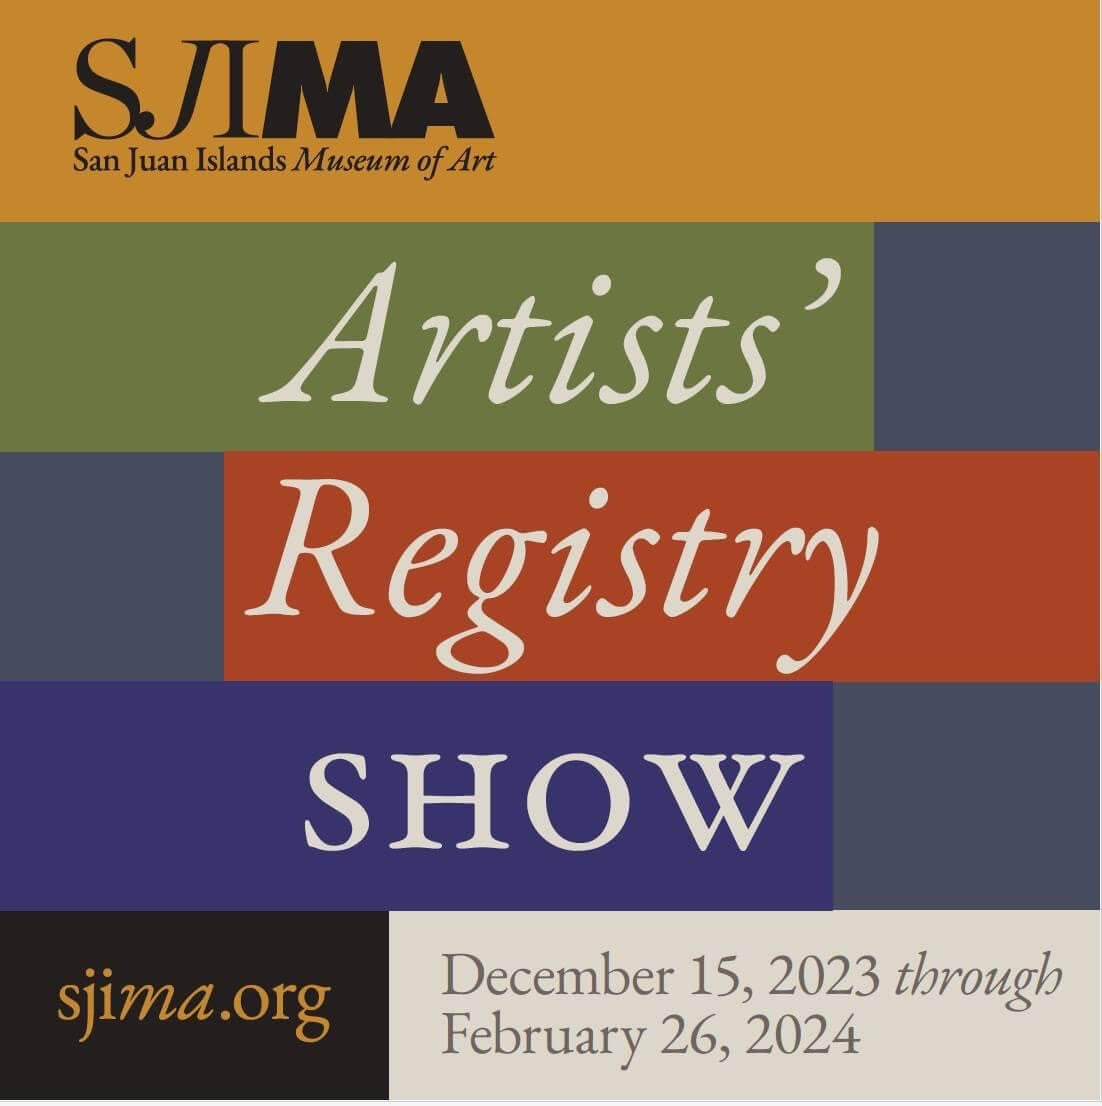 Artists' Registry Show